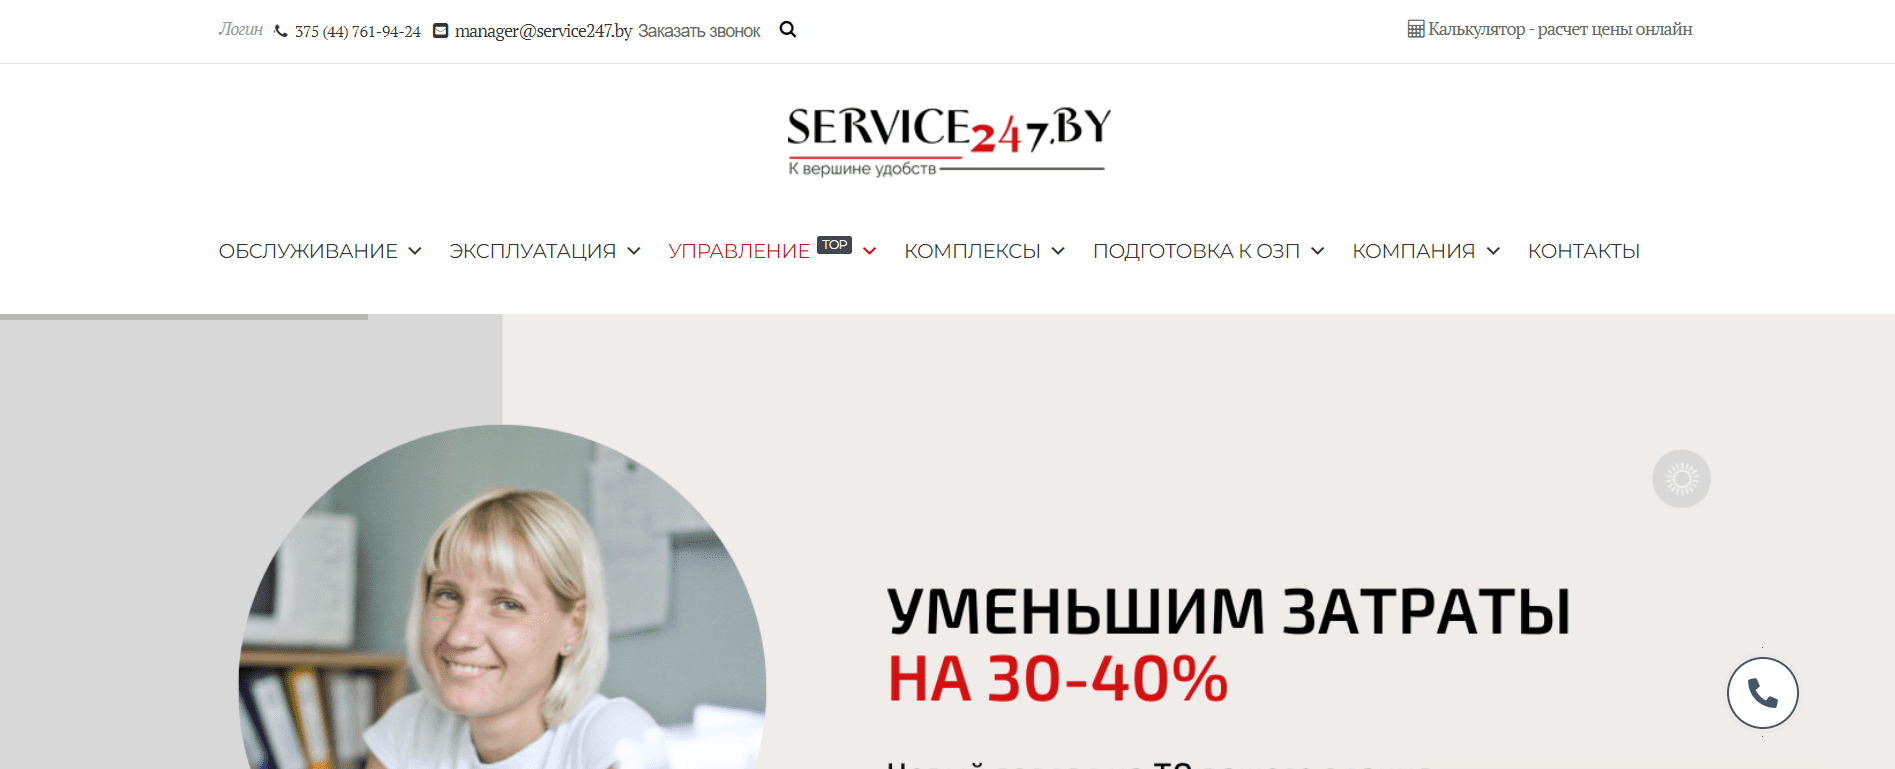 "Сервис 247" (service247.by) - официальный сайт